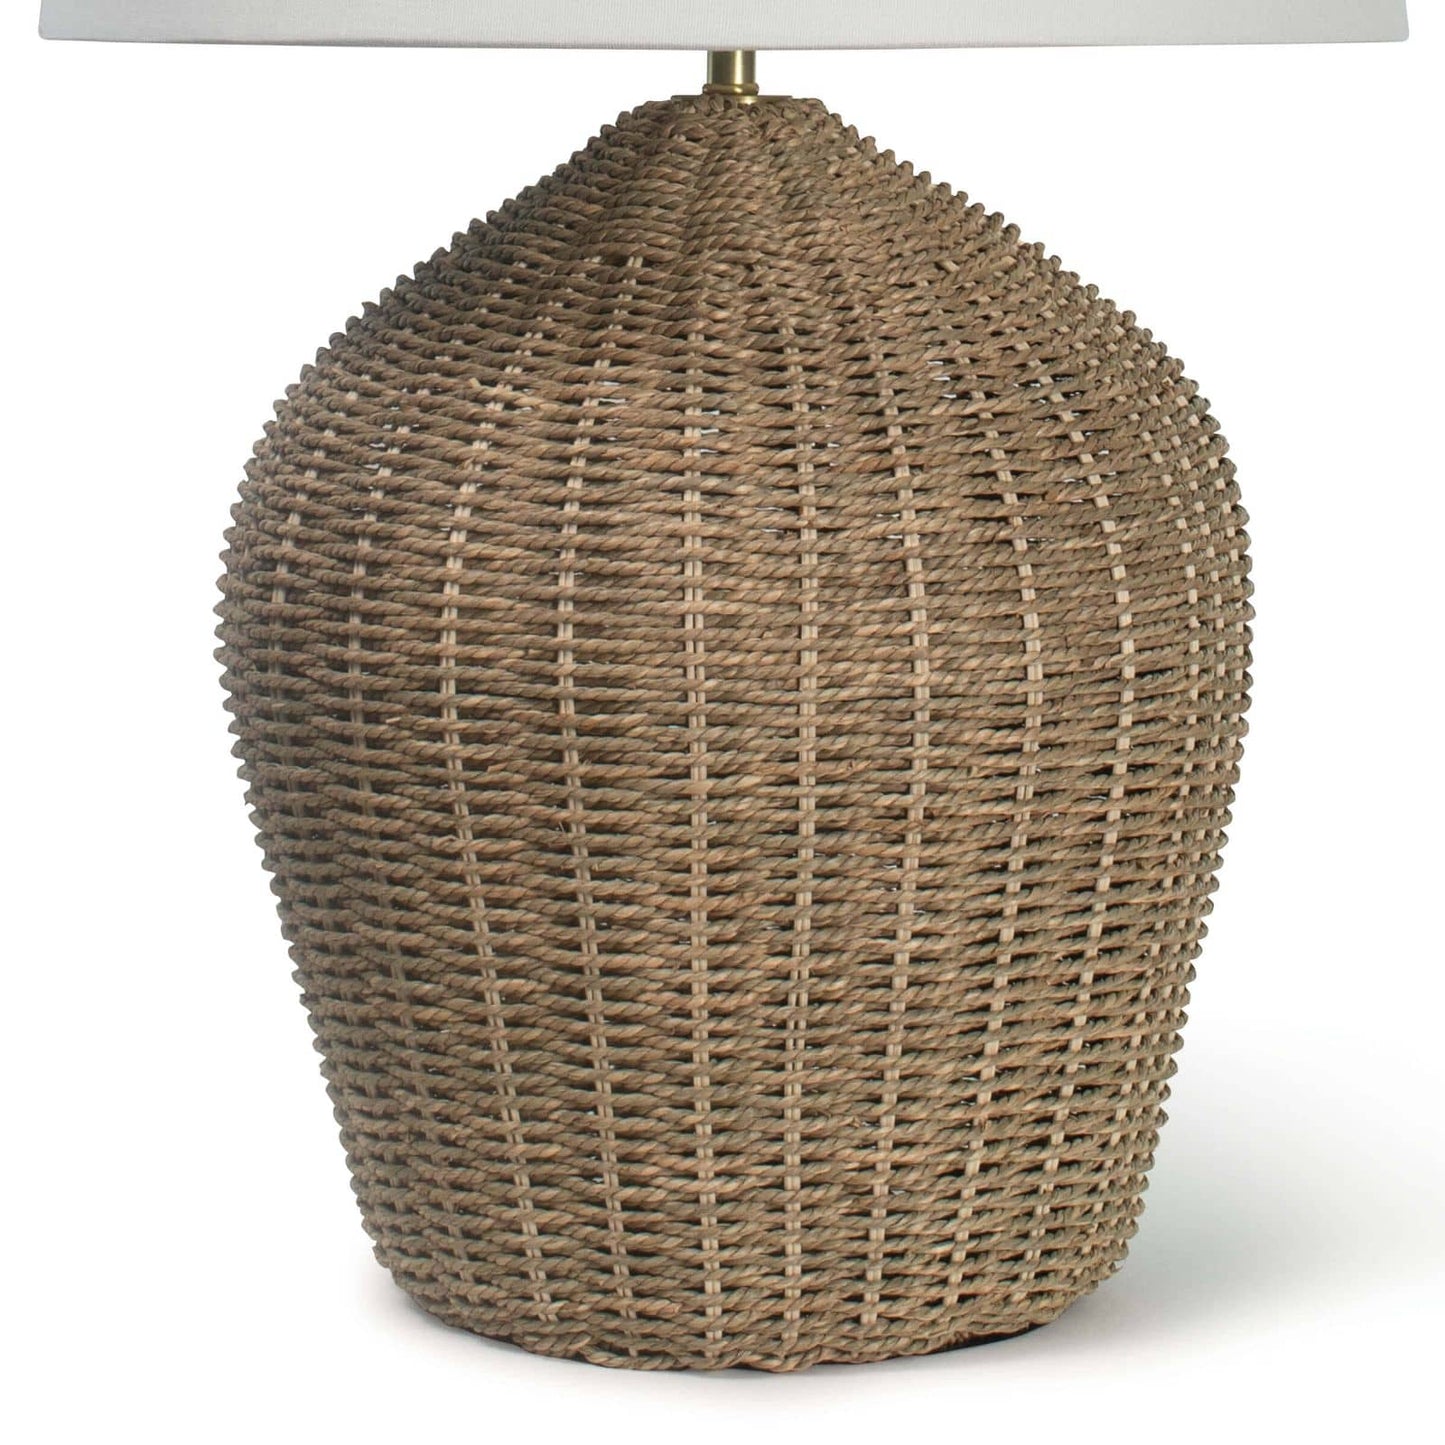 Georgian Table Lamp in Natural by Coastal Living